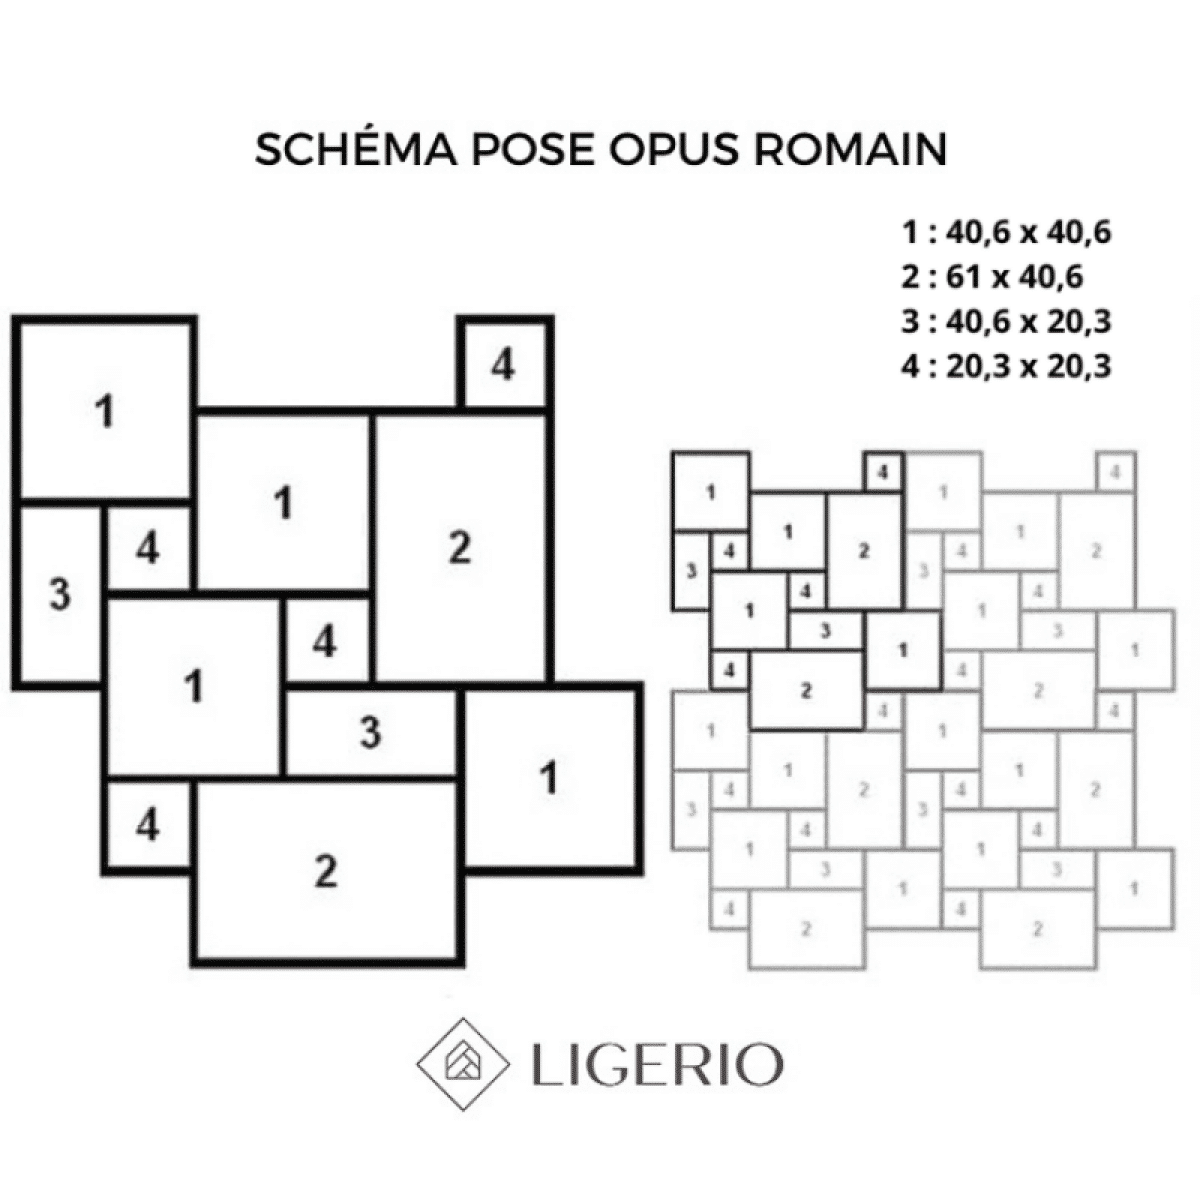 Schéma pose opus romain ligerio